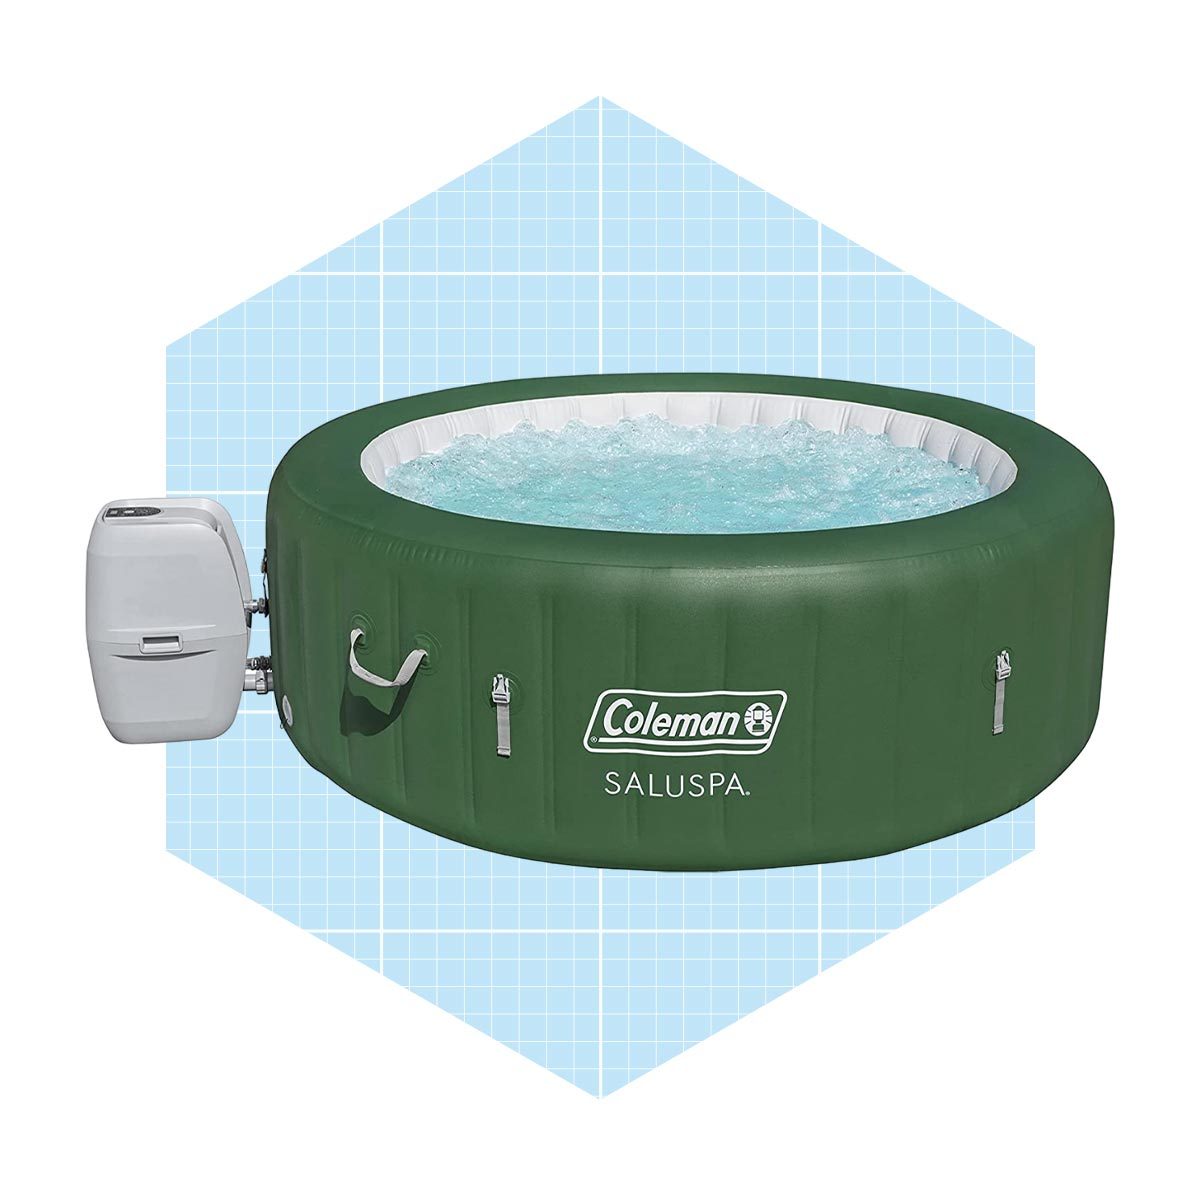 Coleman Saluspa Inflatable Hot Tub Spa